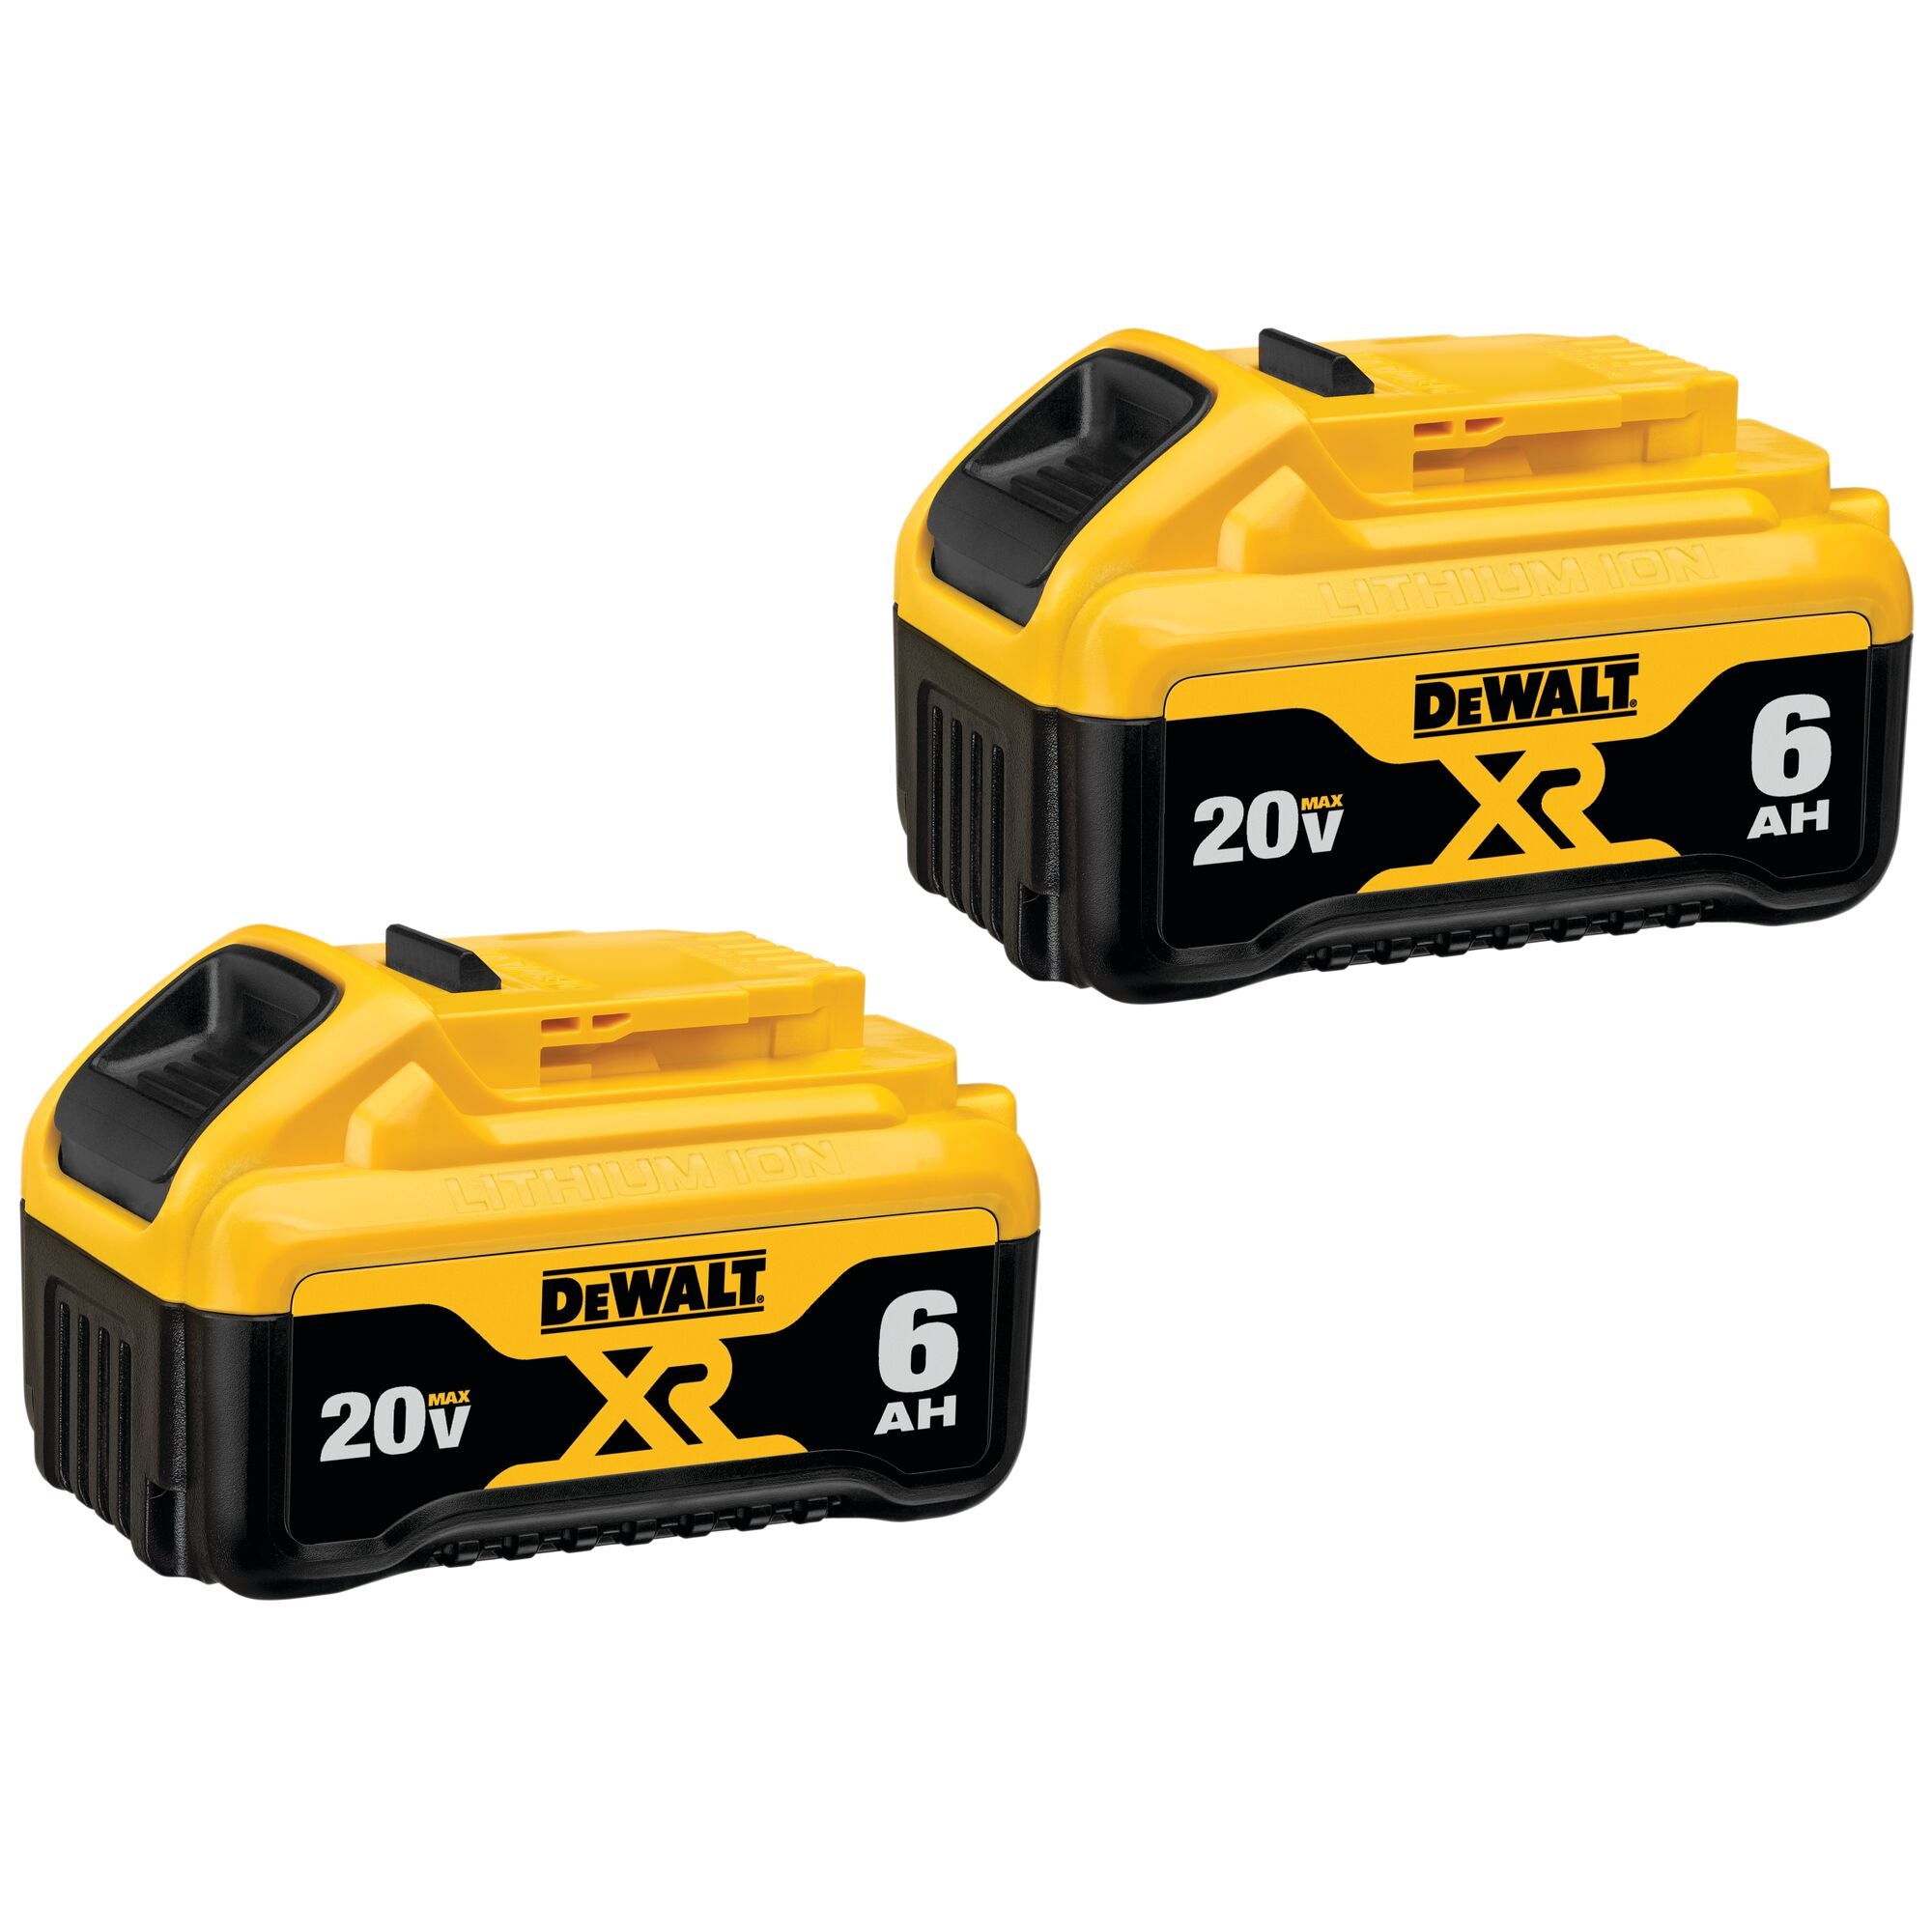 20 Volt XR DeWALT Batteries - 6aH 2 Pack